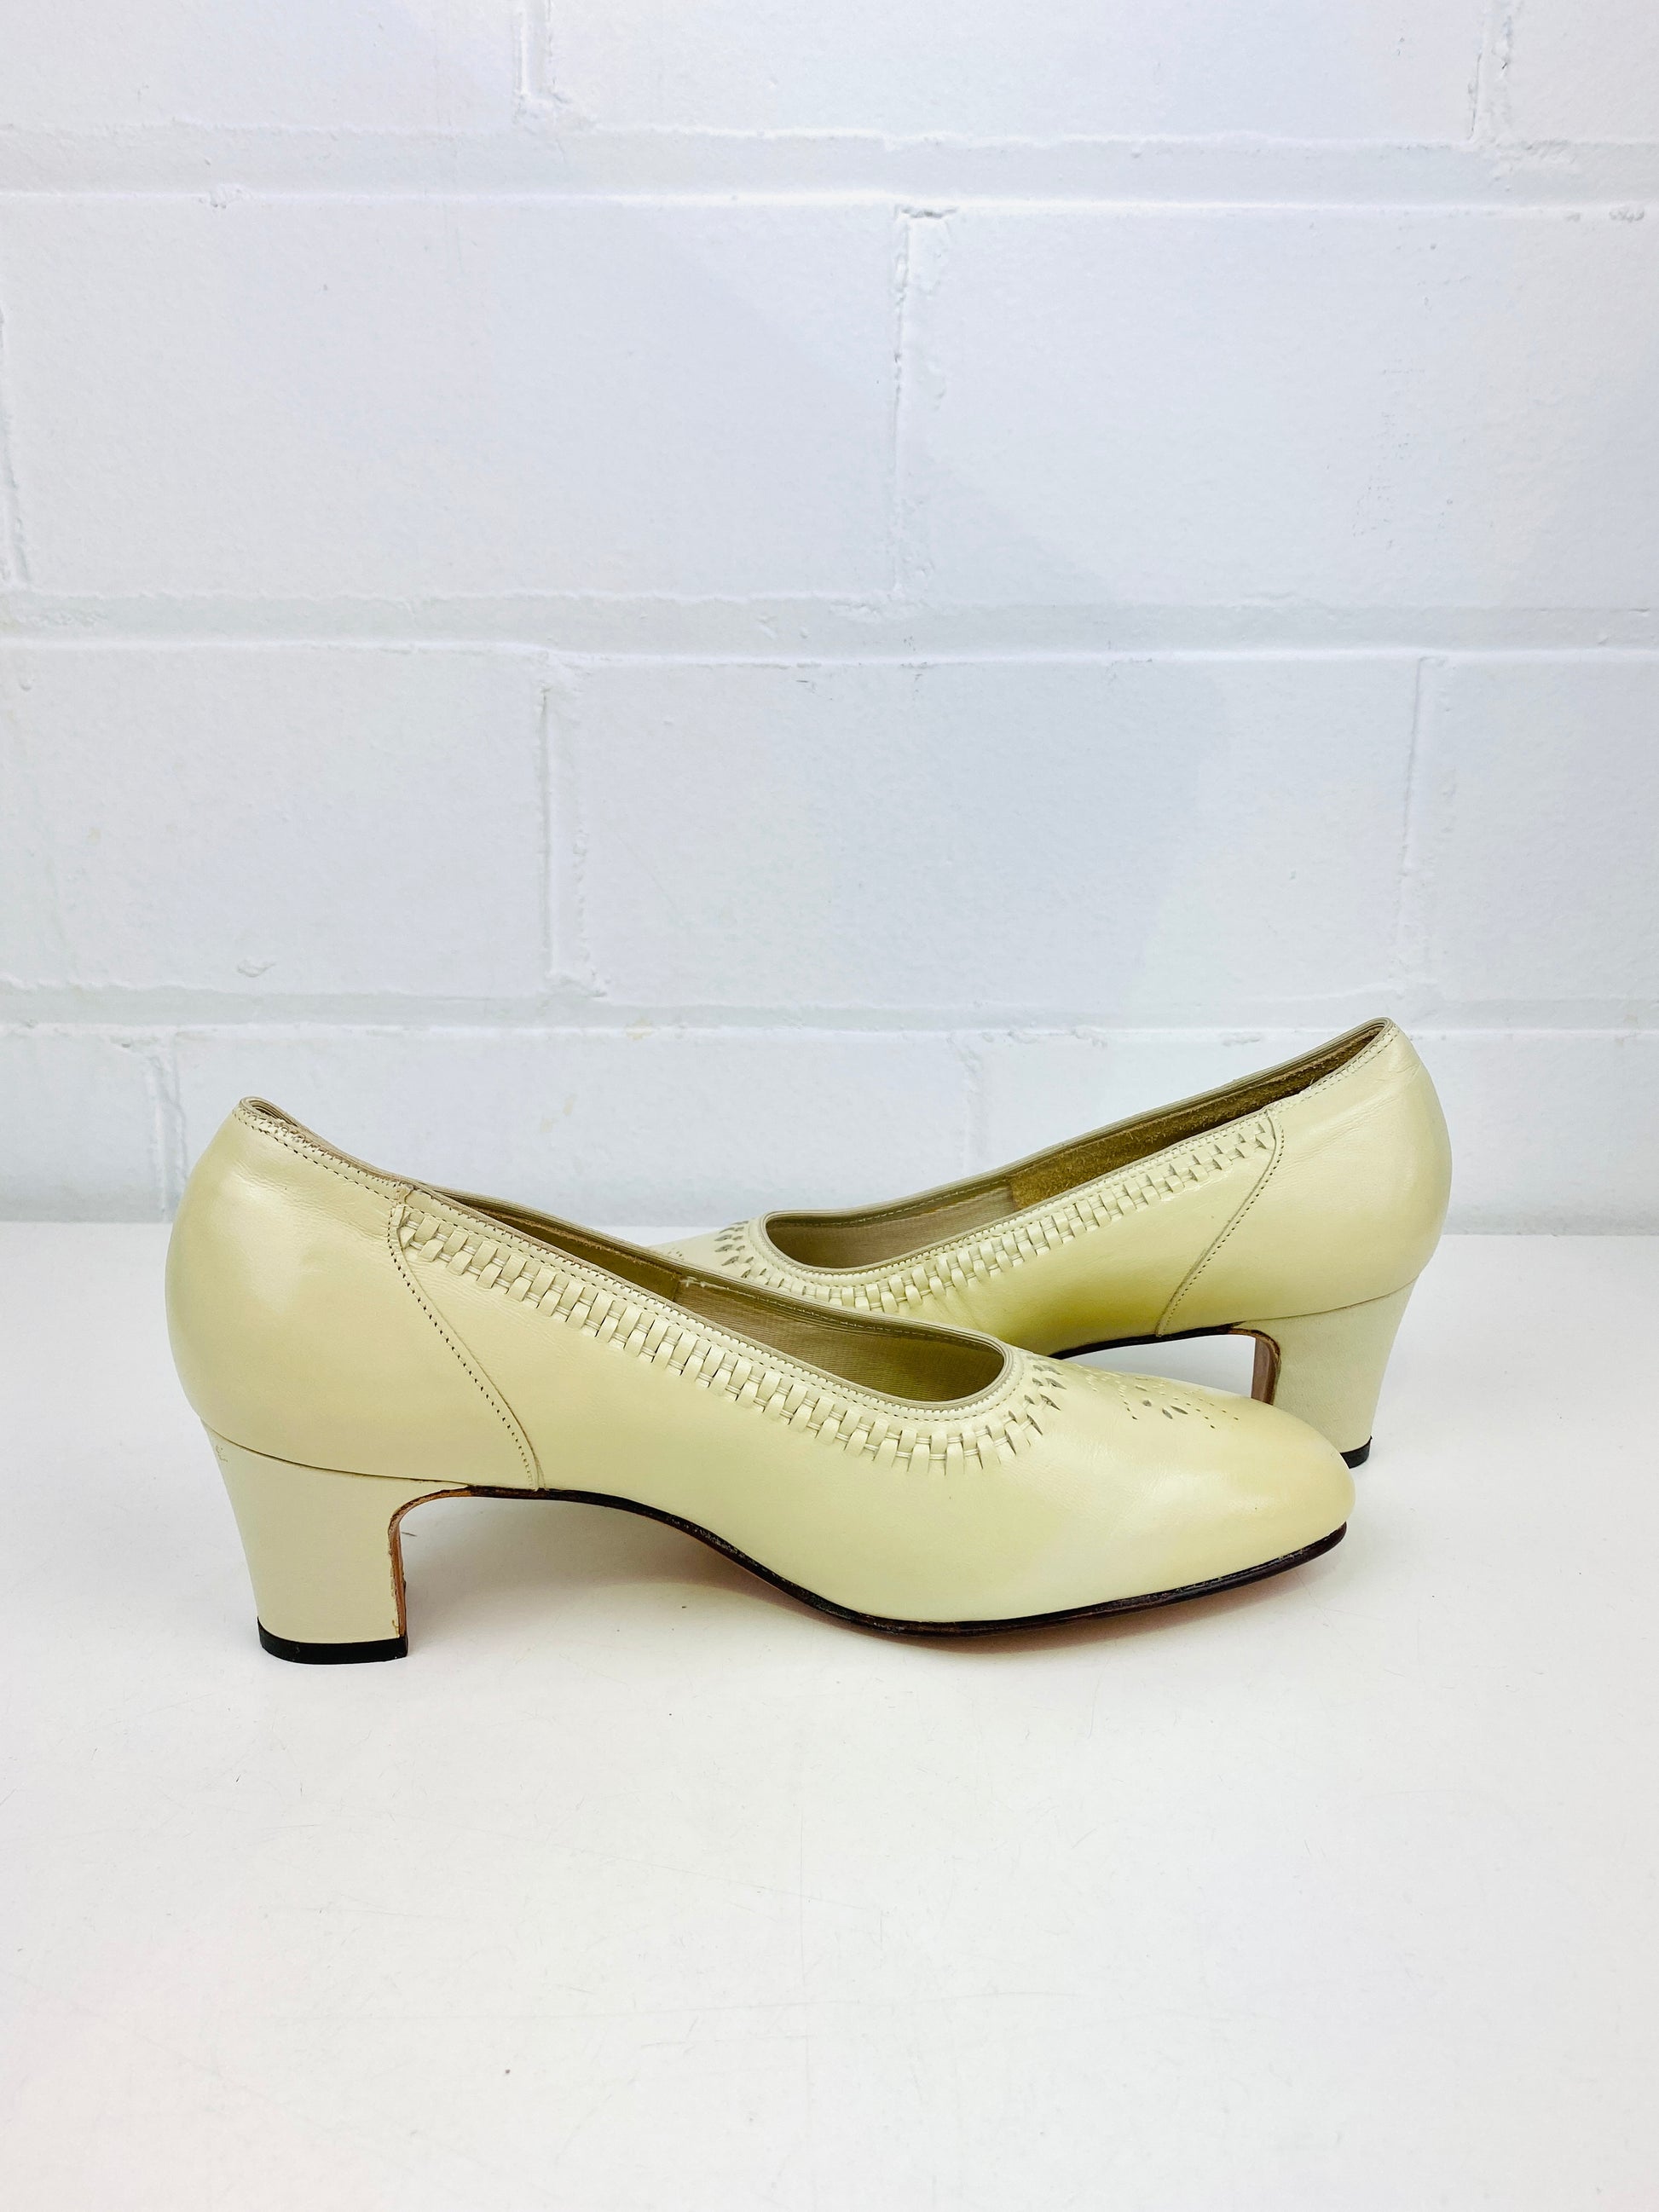 Vintage Deadstock Shoes, Women's 1980s Beige Leather Mid-Heel Pumps, NOS, 7681